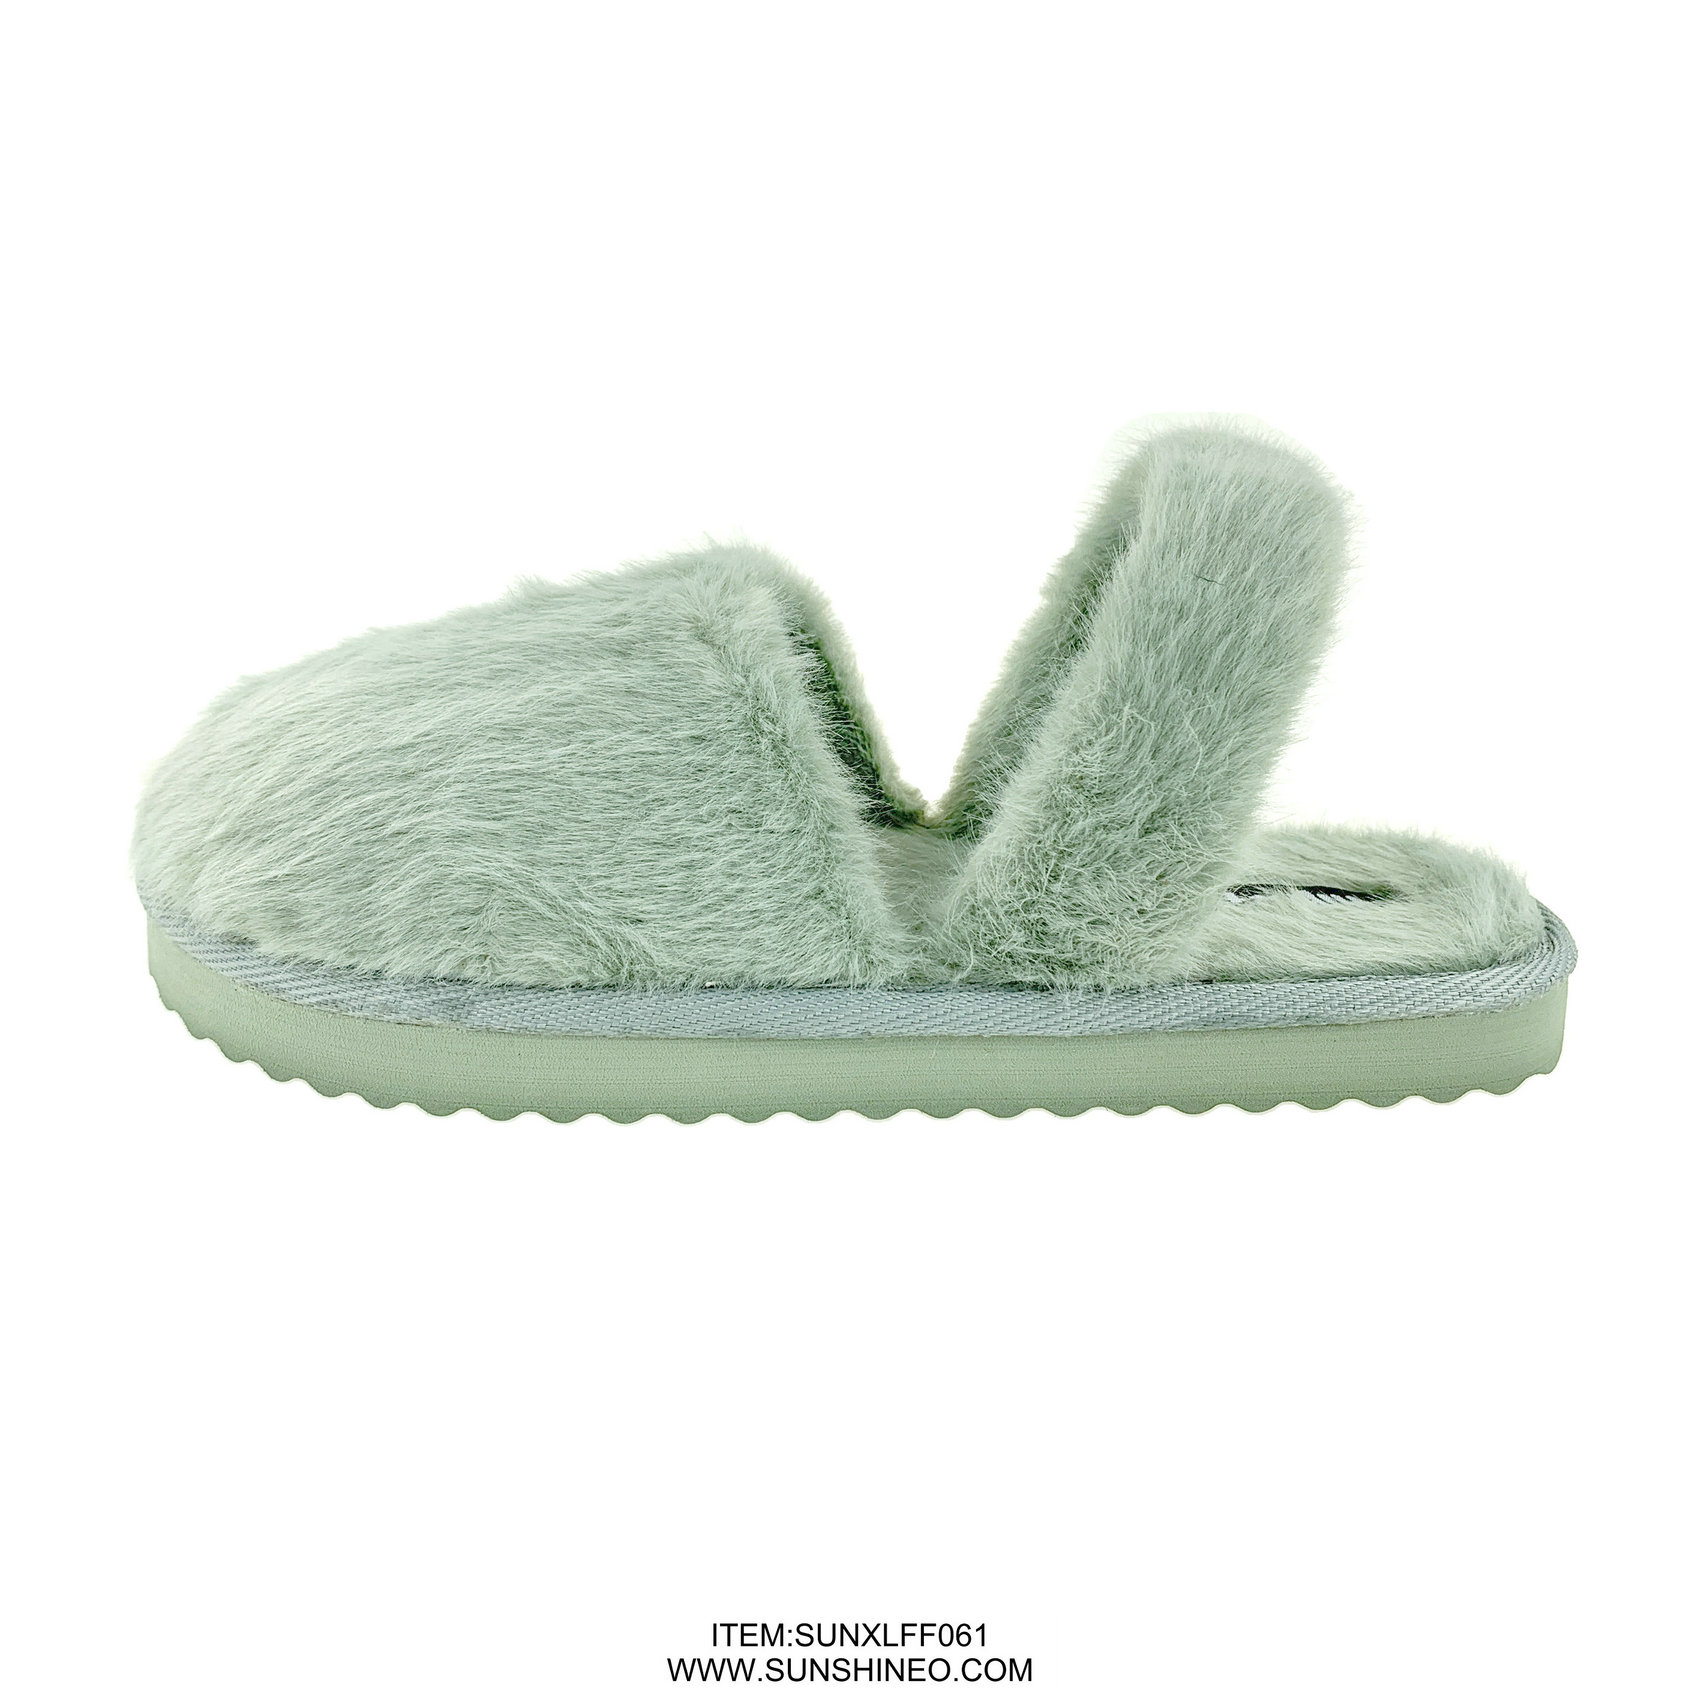 SUNXLFF061 fur flip flop sandals winter slippers